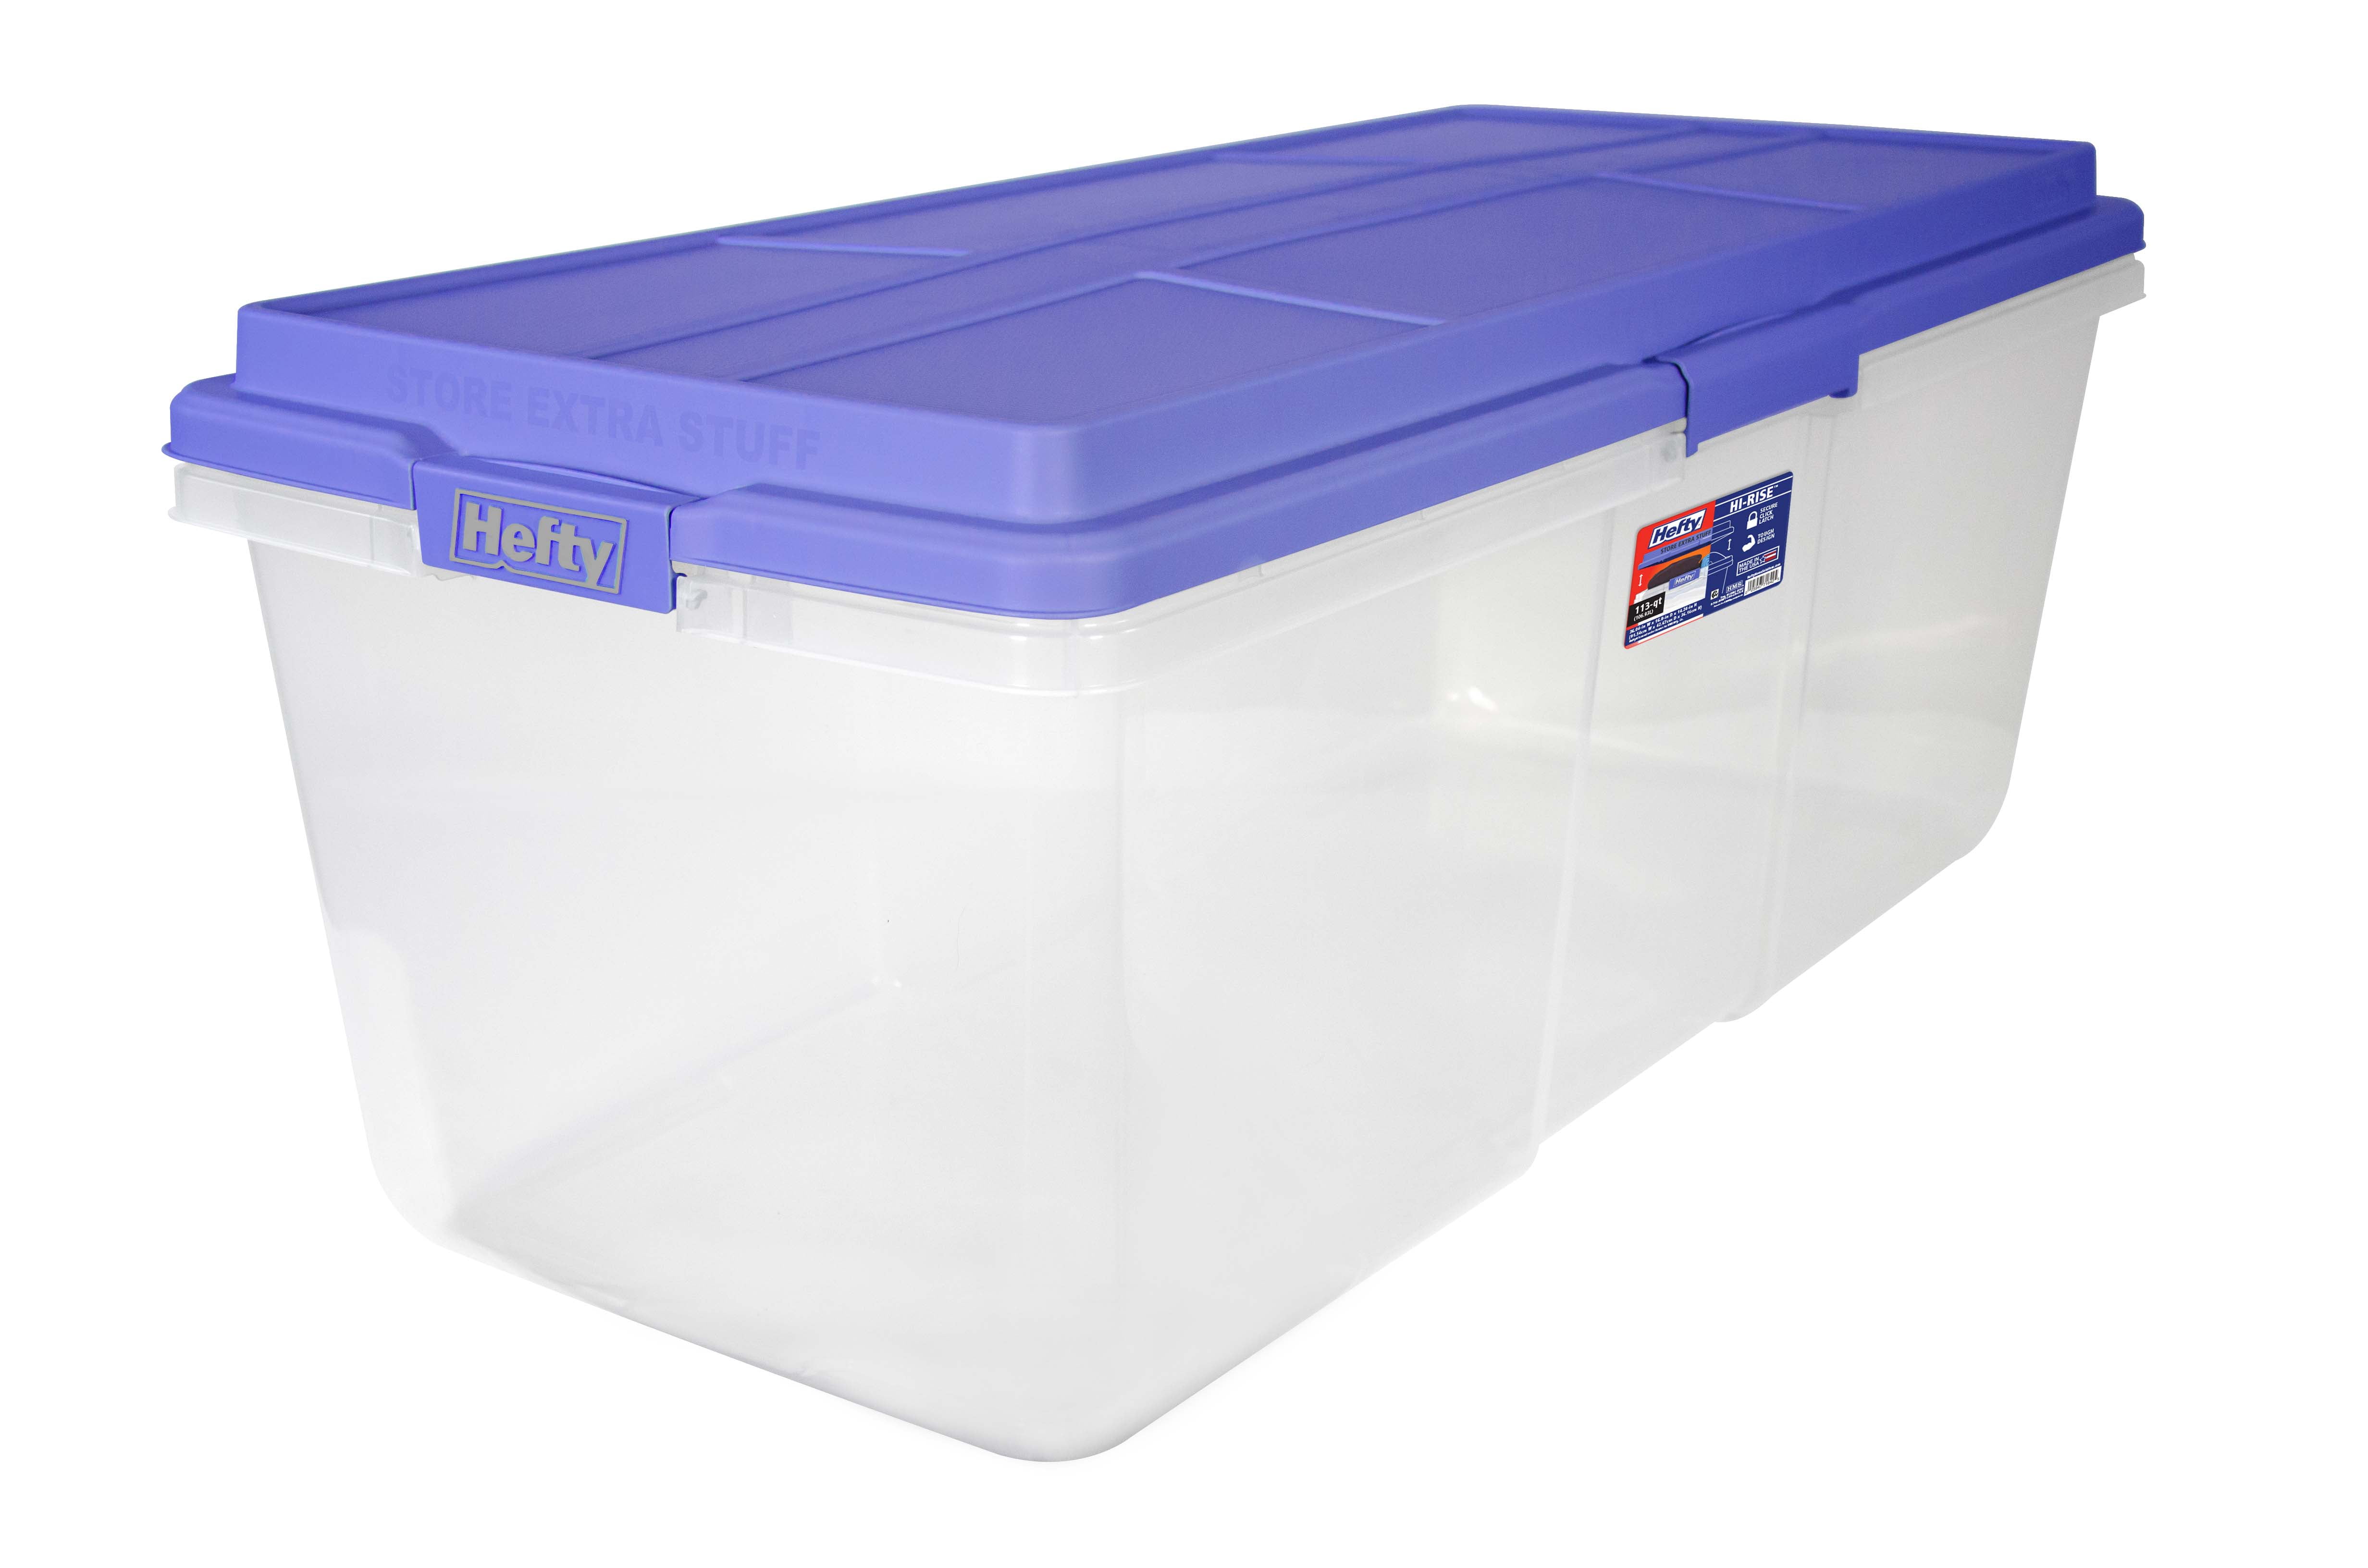 Hefty 40 qt. Clear Plastic Storage Bin with Blue Hi-Rise Lid, 6 Pack